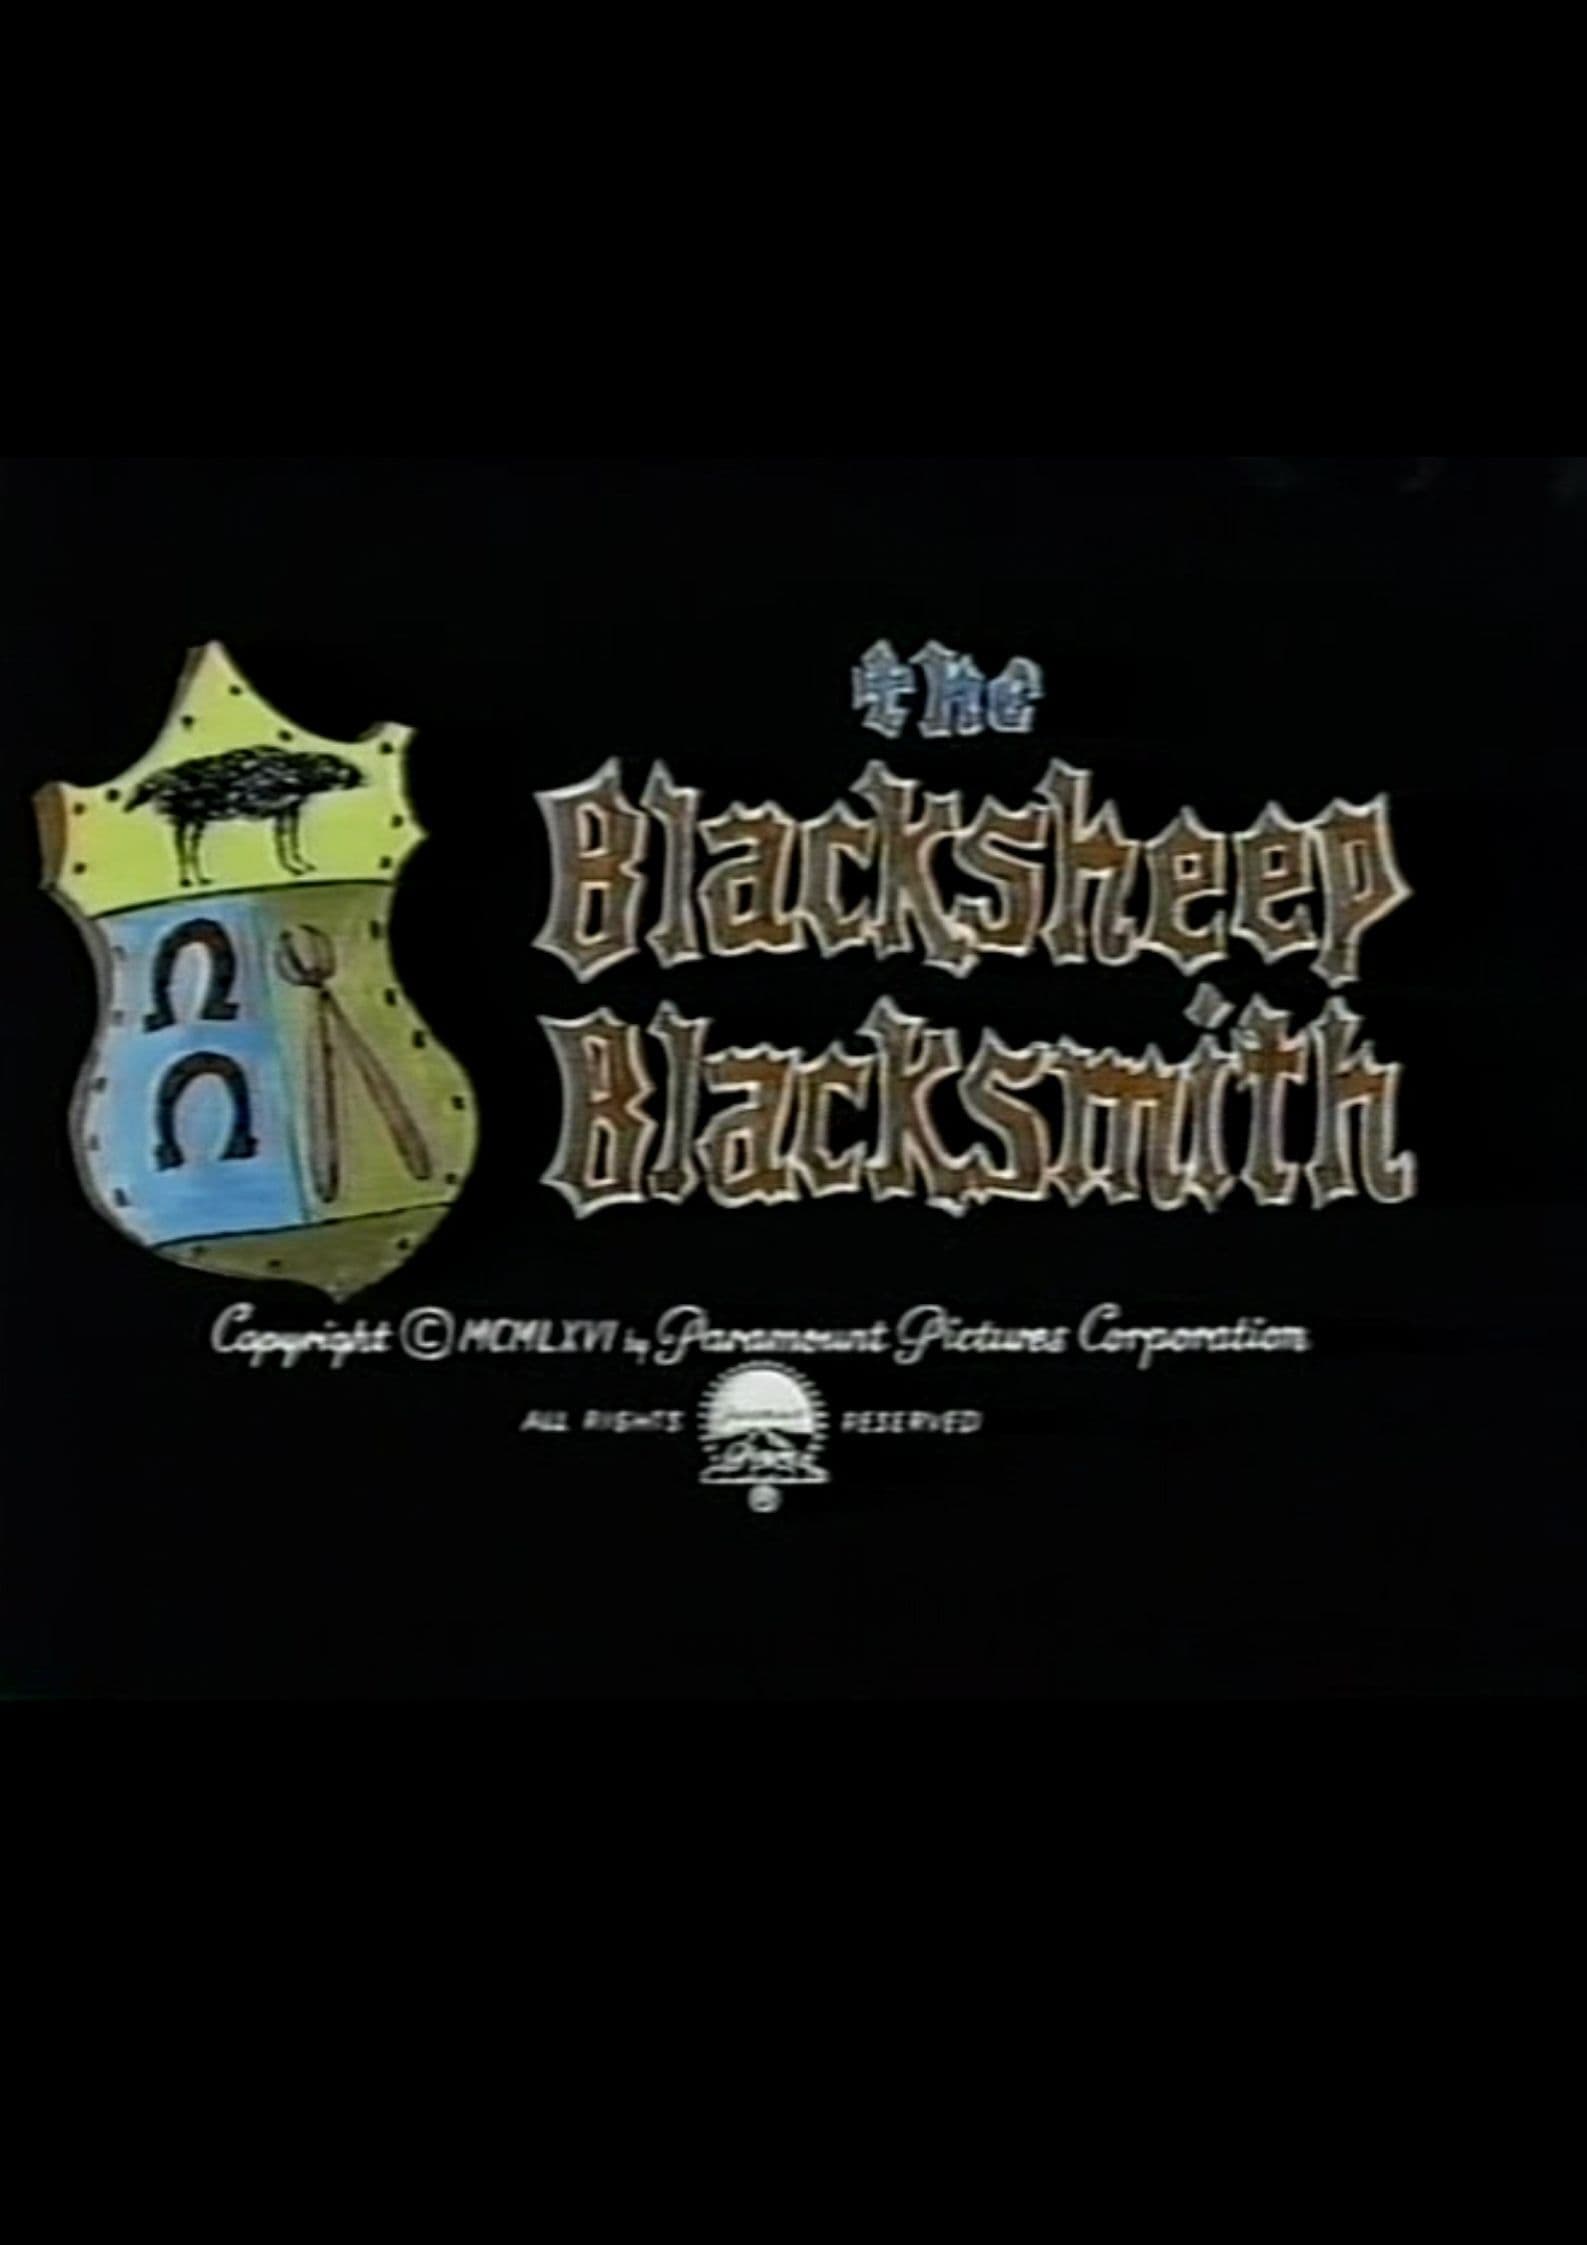 The Blacksheep Blacksmith